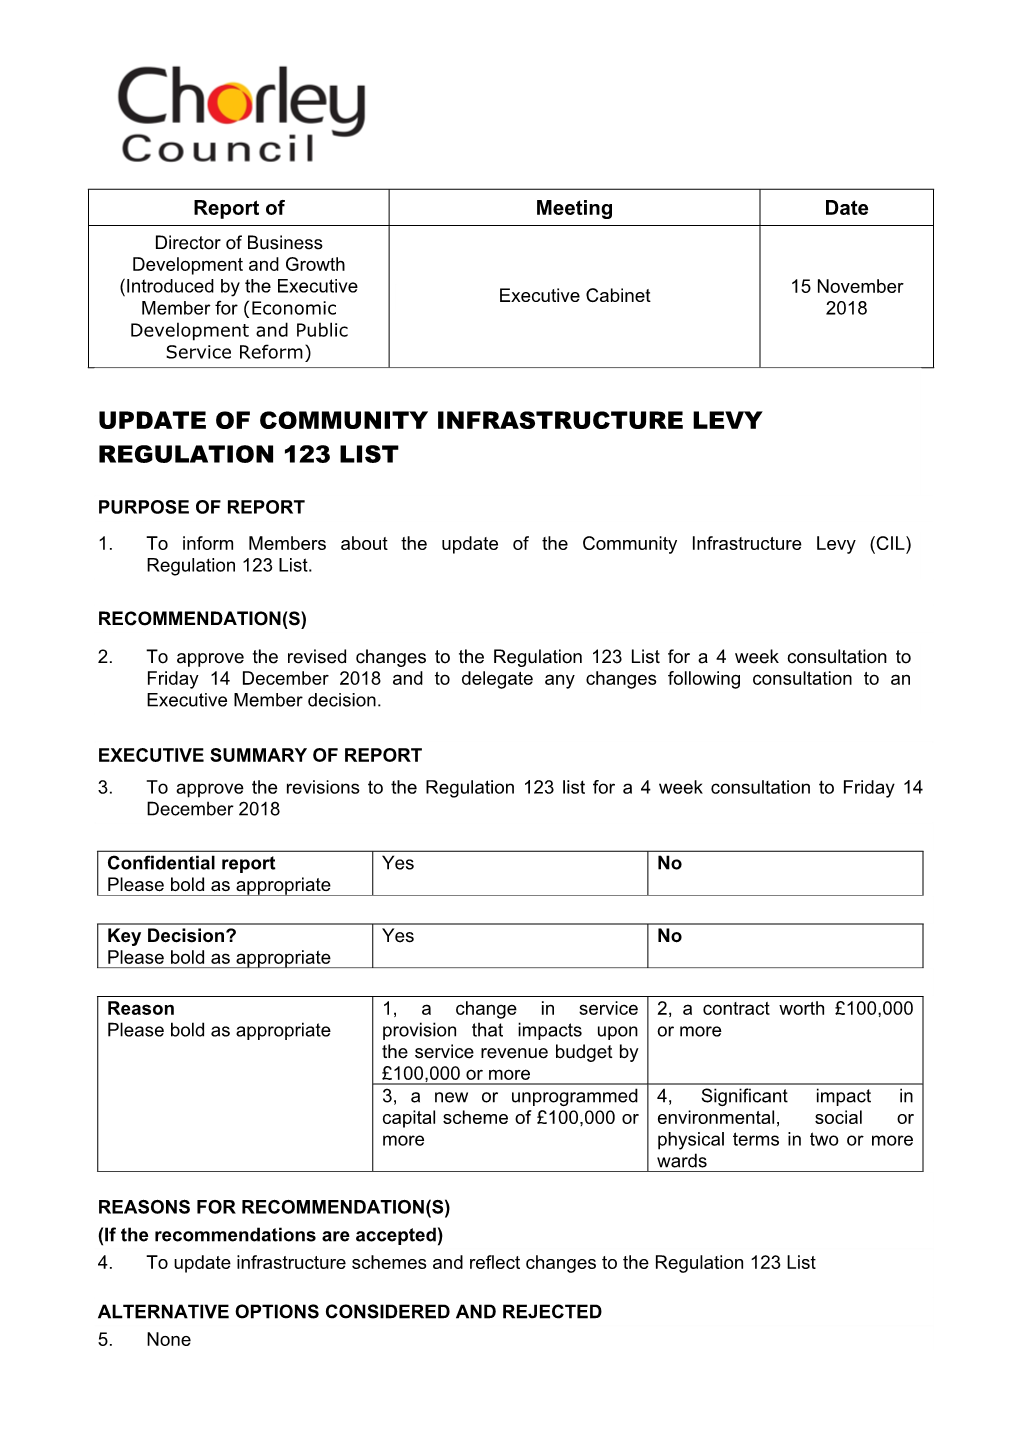 Update of Community Infrastructure Levy Regulation 123 List